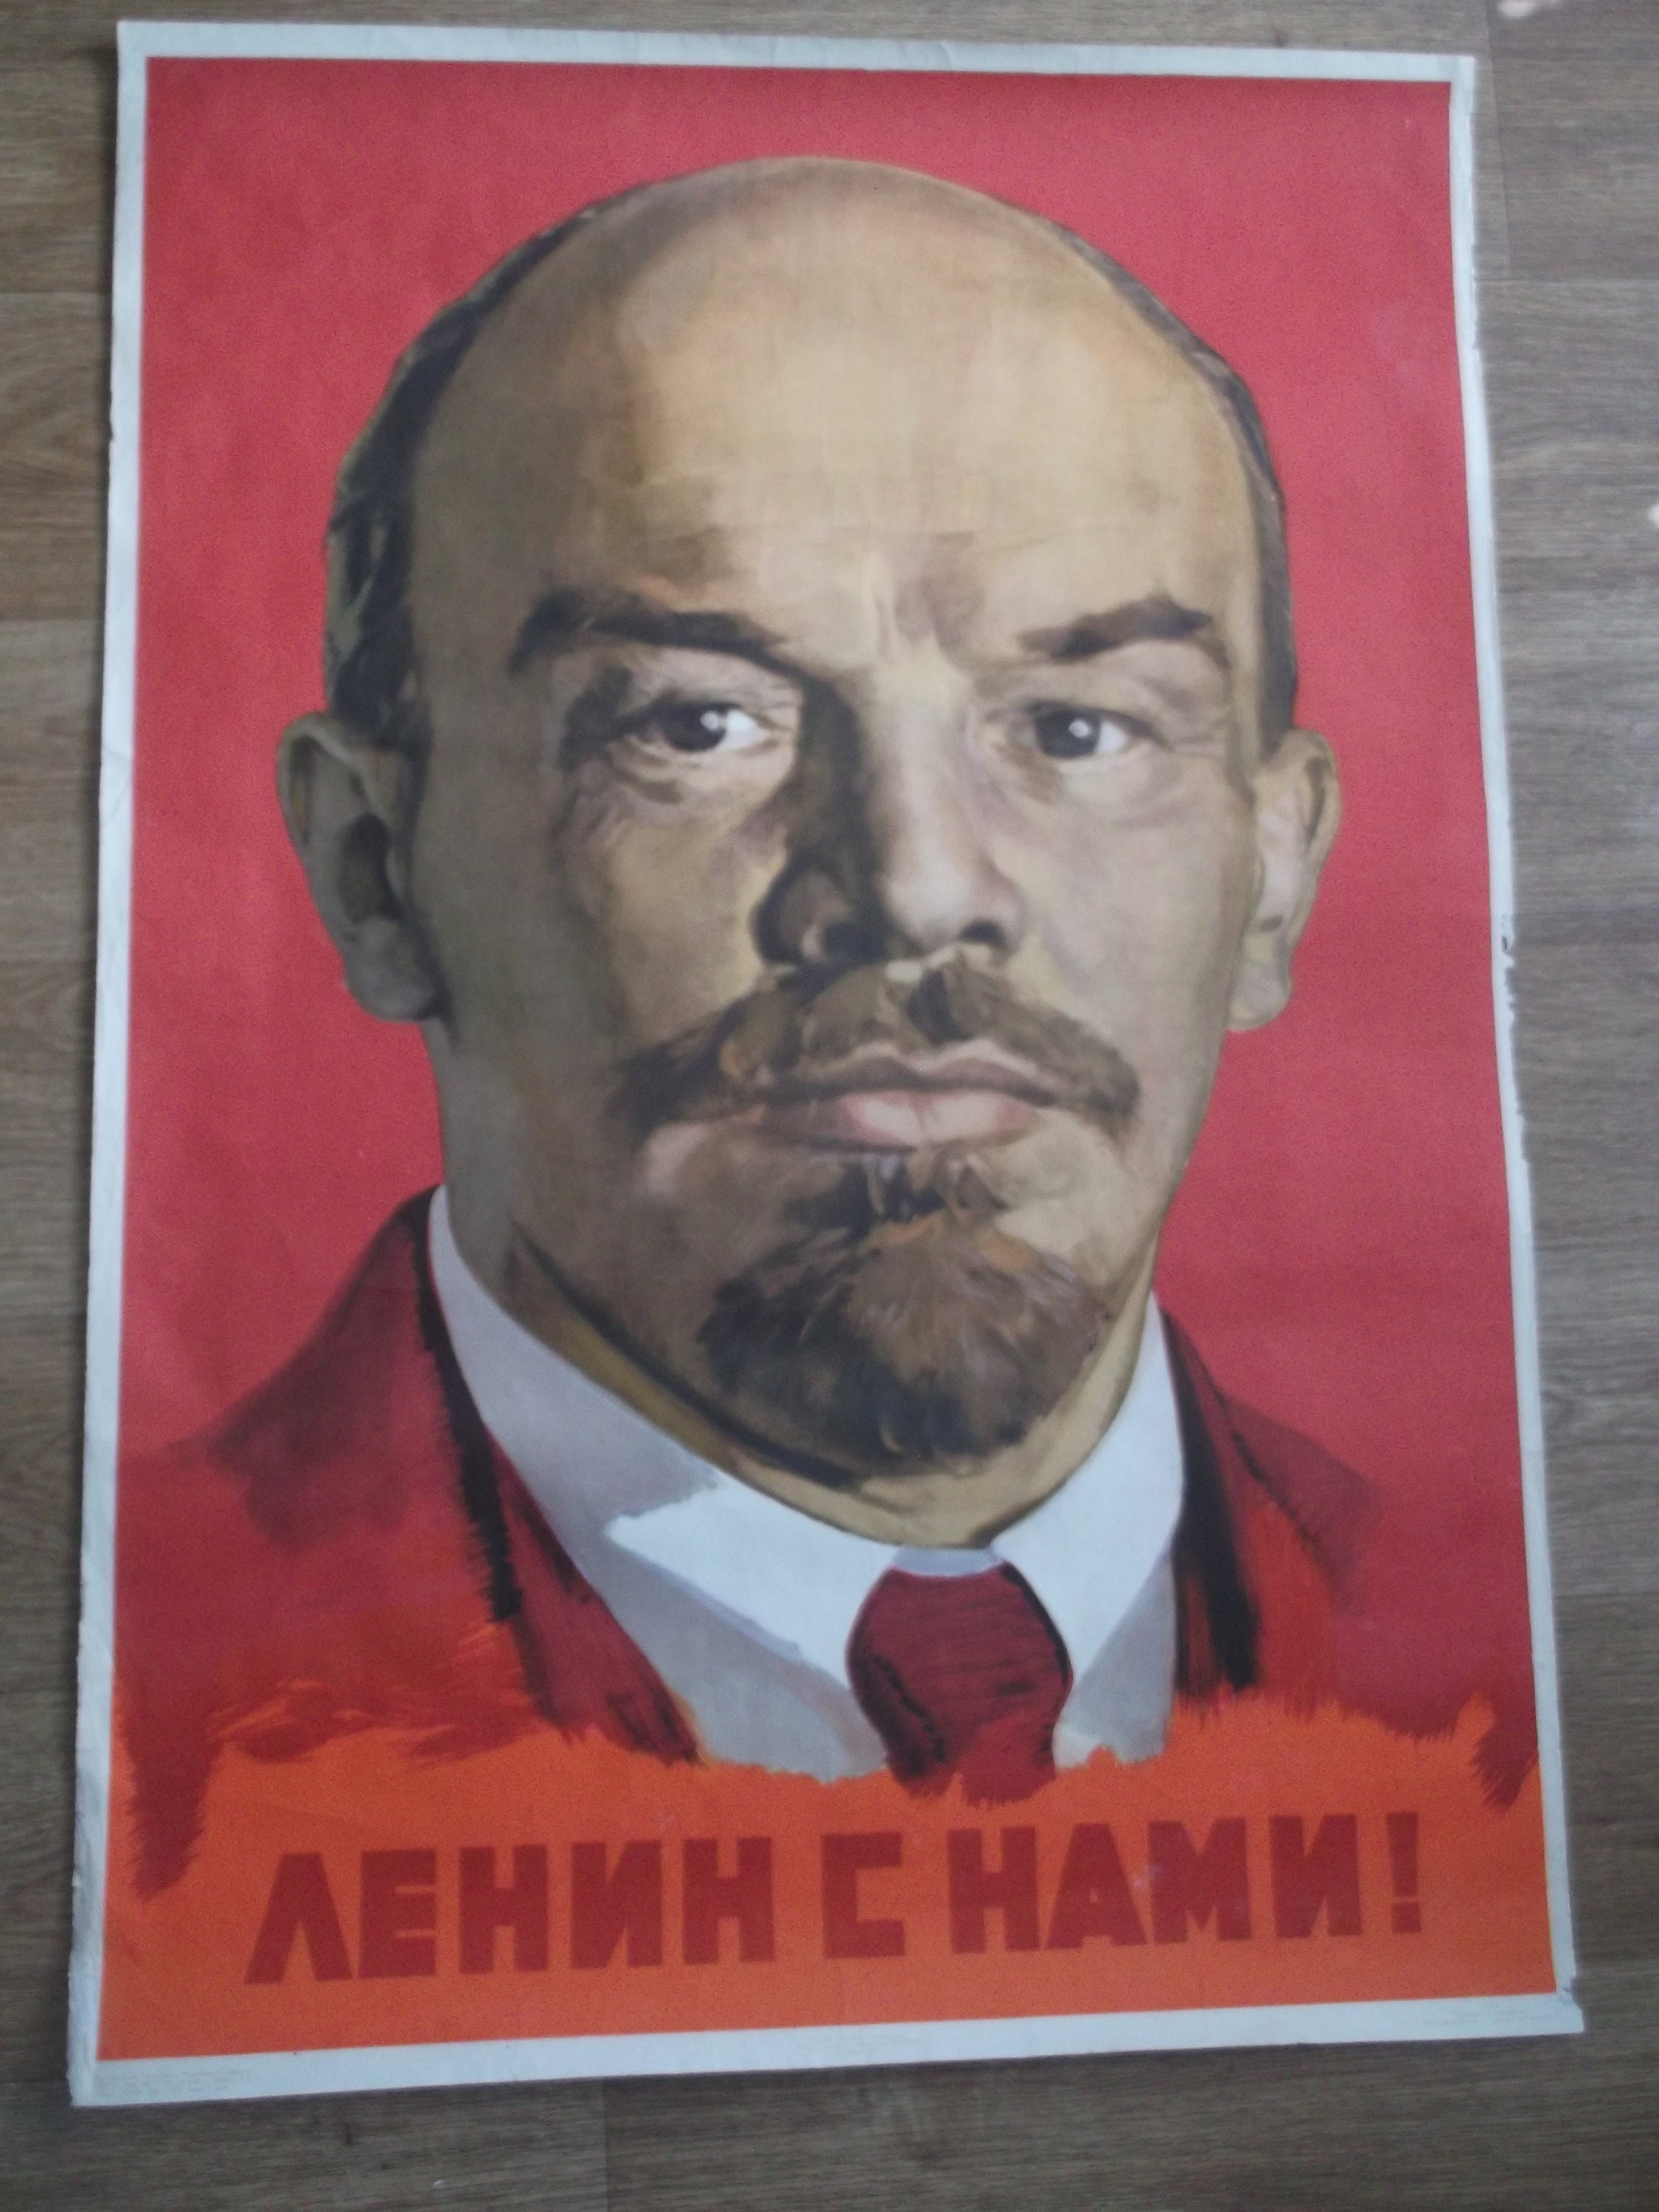 Soviet Old Communist Poster. Lenin is With Us. Propaganda - Etsy